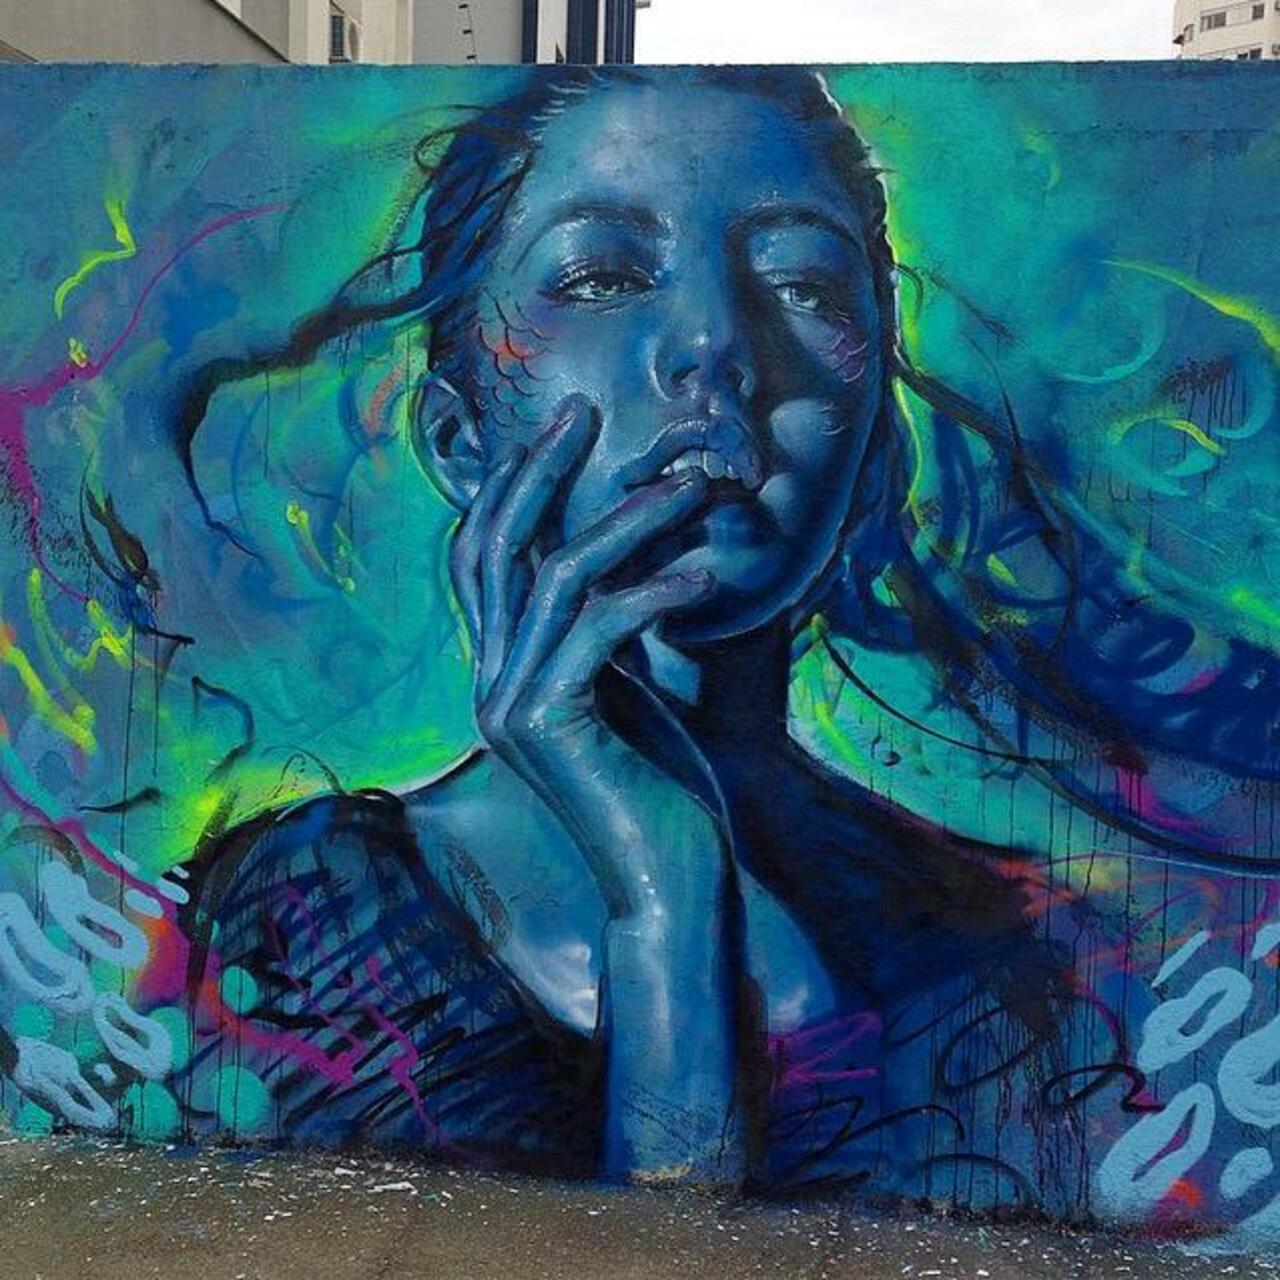 Thiago Valdi new Street Art piece titled 'Day Dreamer'

#art #mural #graffiti #streetart http://t.co/YThtsrkQH2